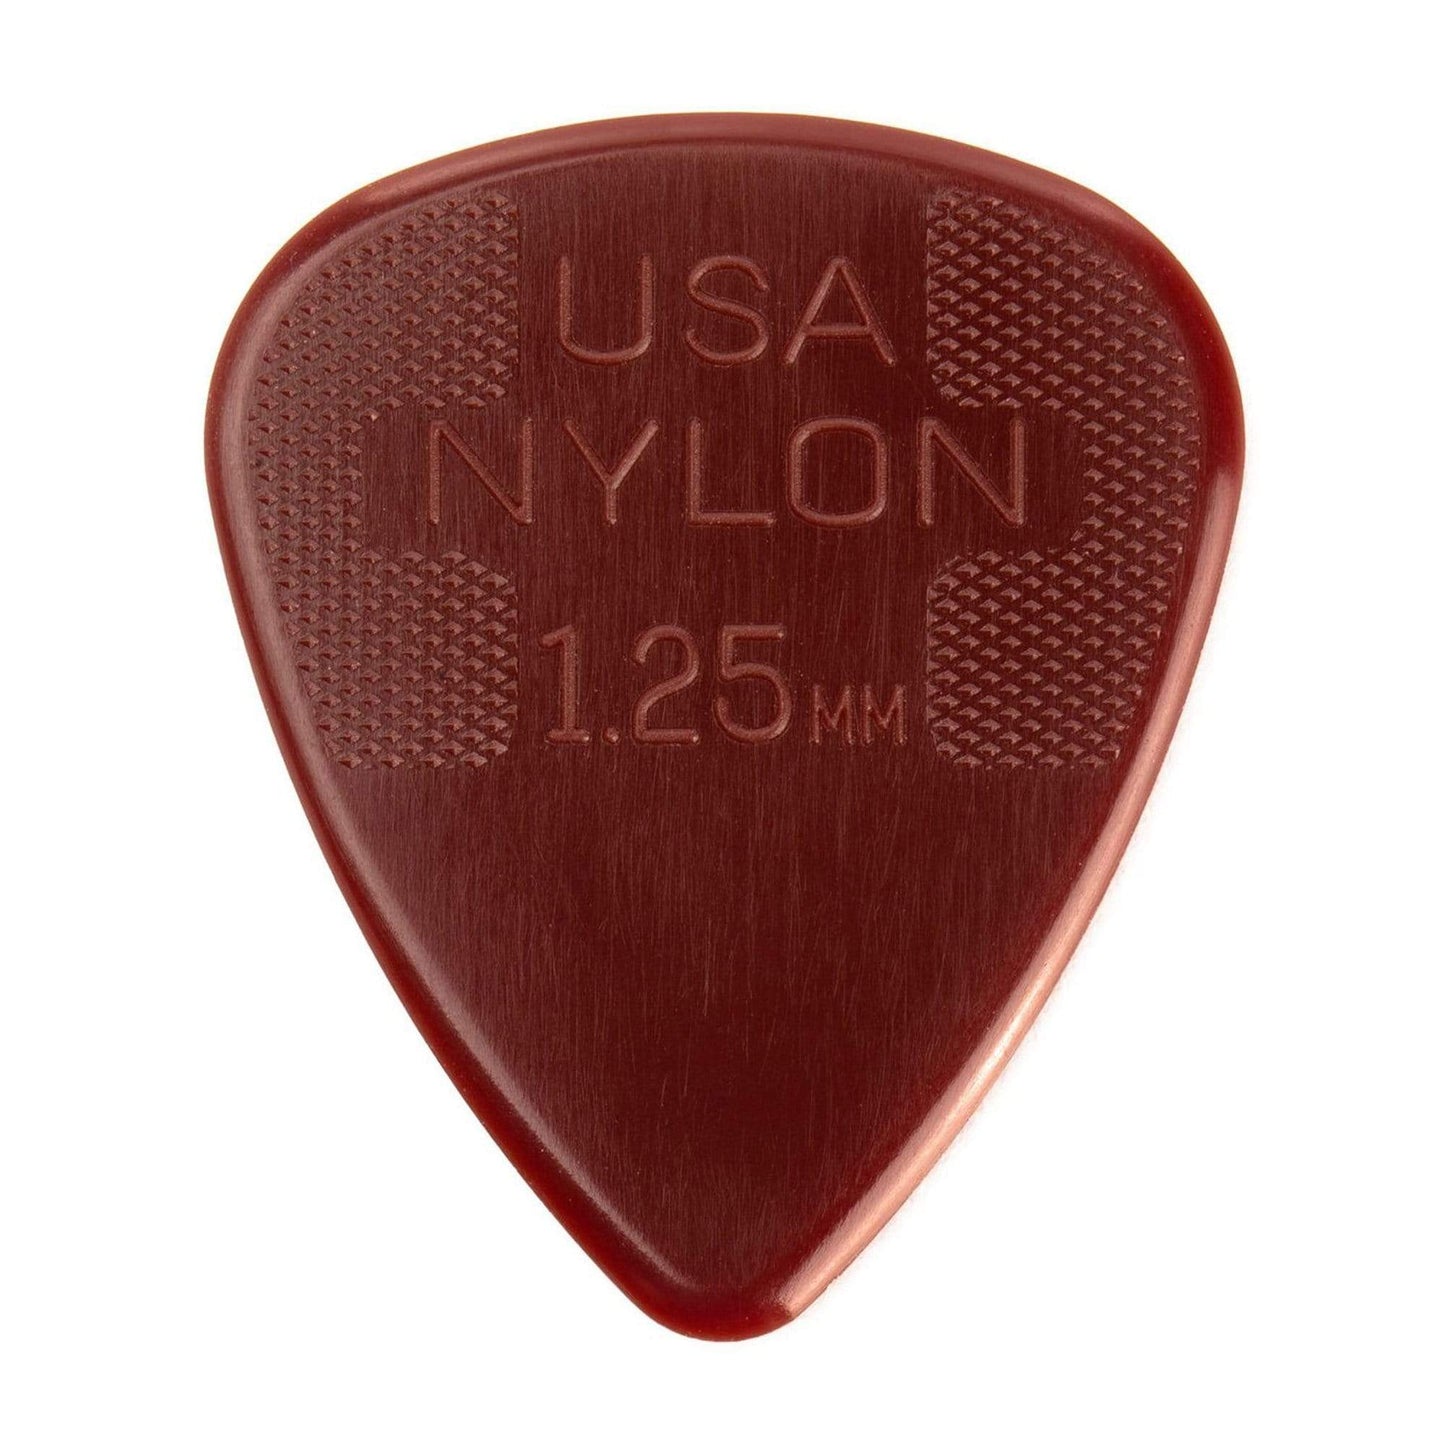 Dunlop Nylon Standard Picks Extra Heavy 1.25mm 12-Pack Accessories / Picks